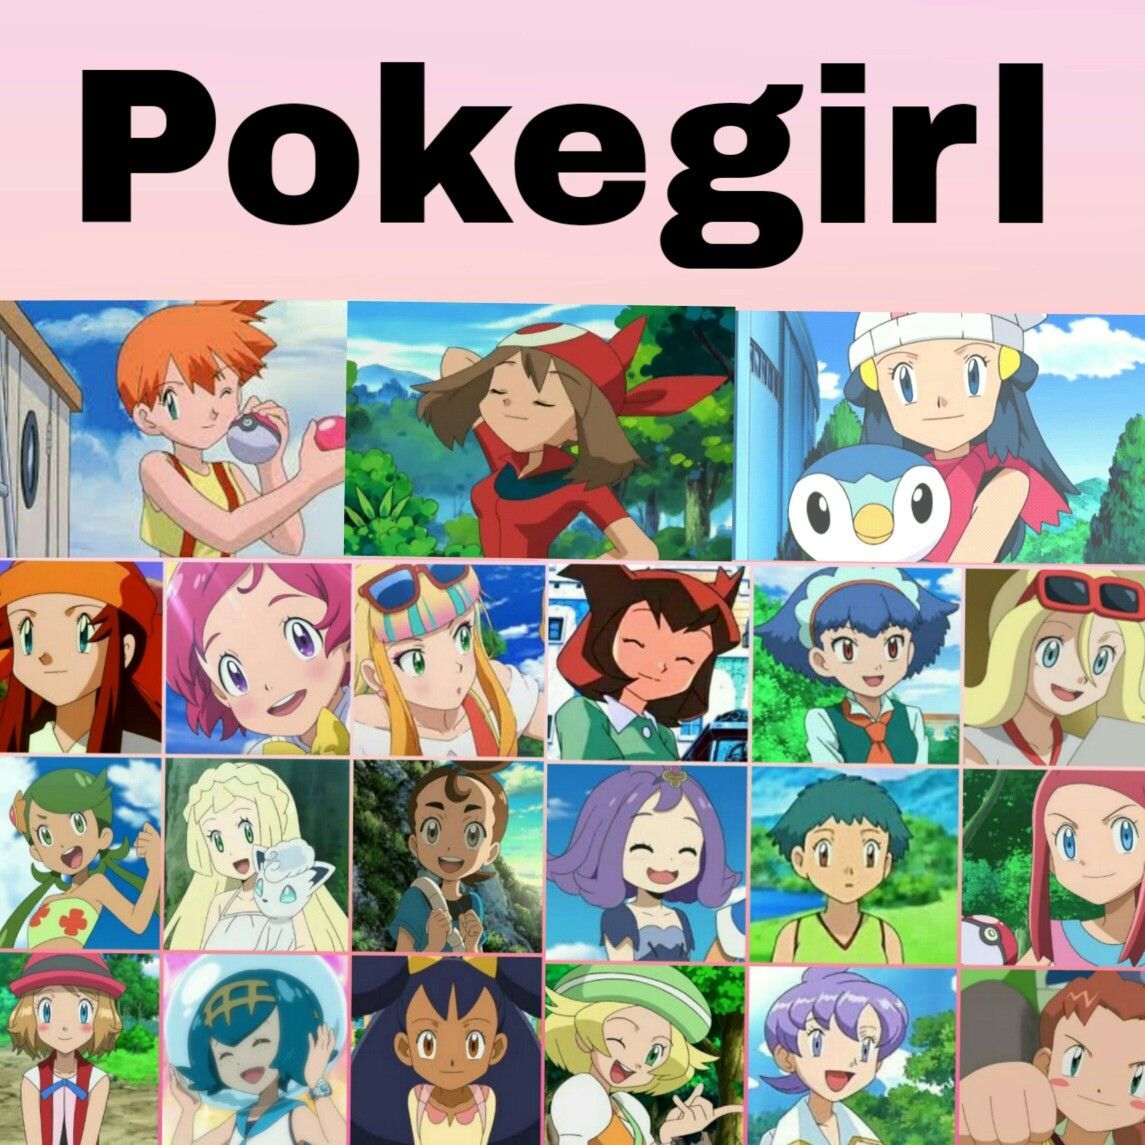 Pokegirl misty may dawn iris serena lana Lillie mallow. Pokémon heroes, Pokemon characters, Pokemon